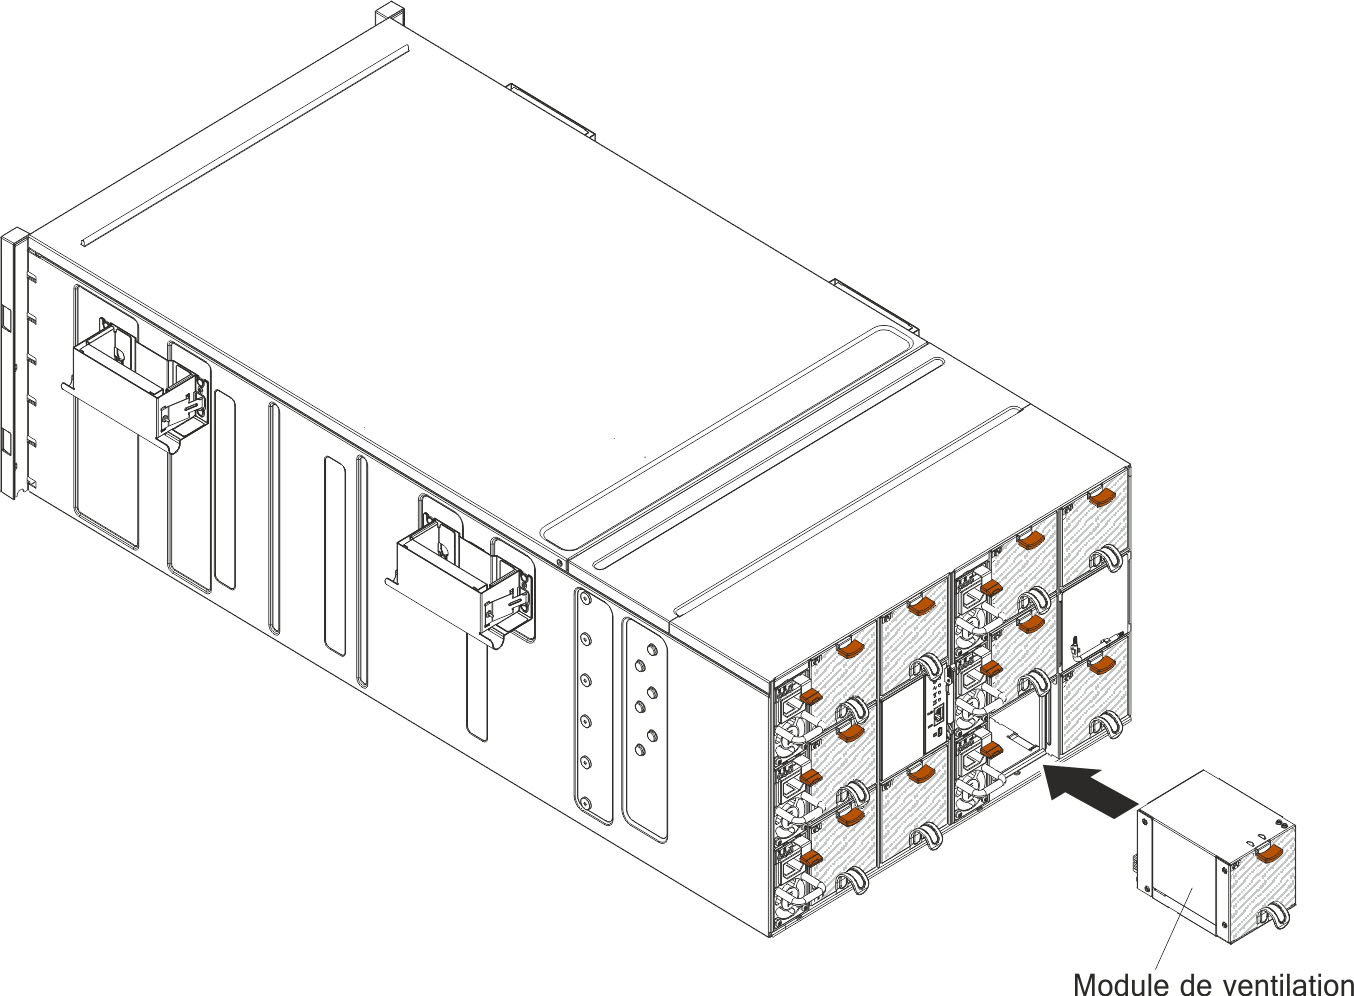 Figure illustrant l'installation d'un module de ventilation